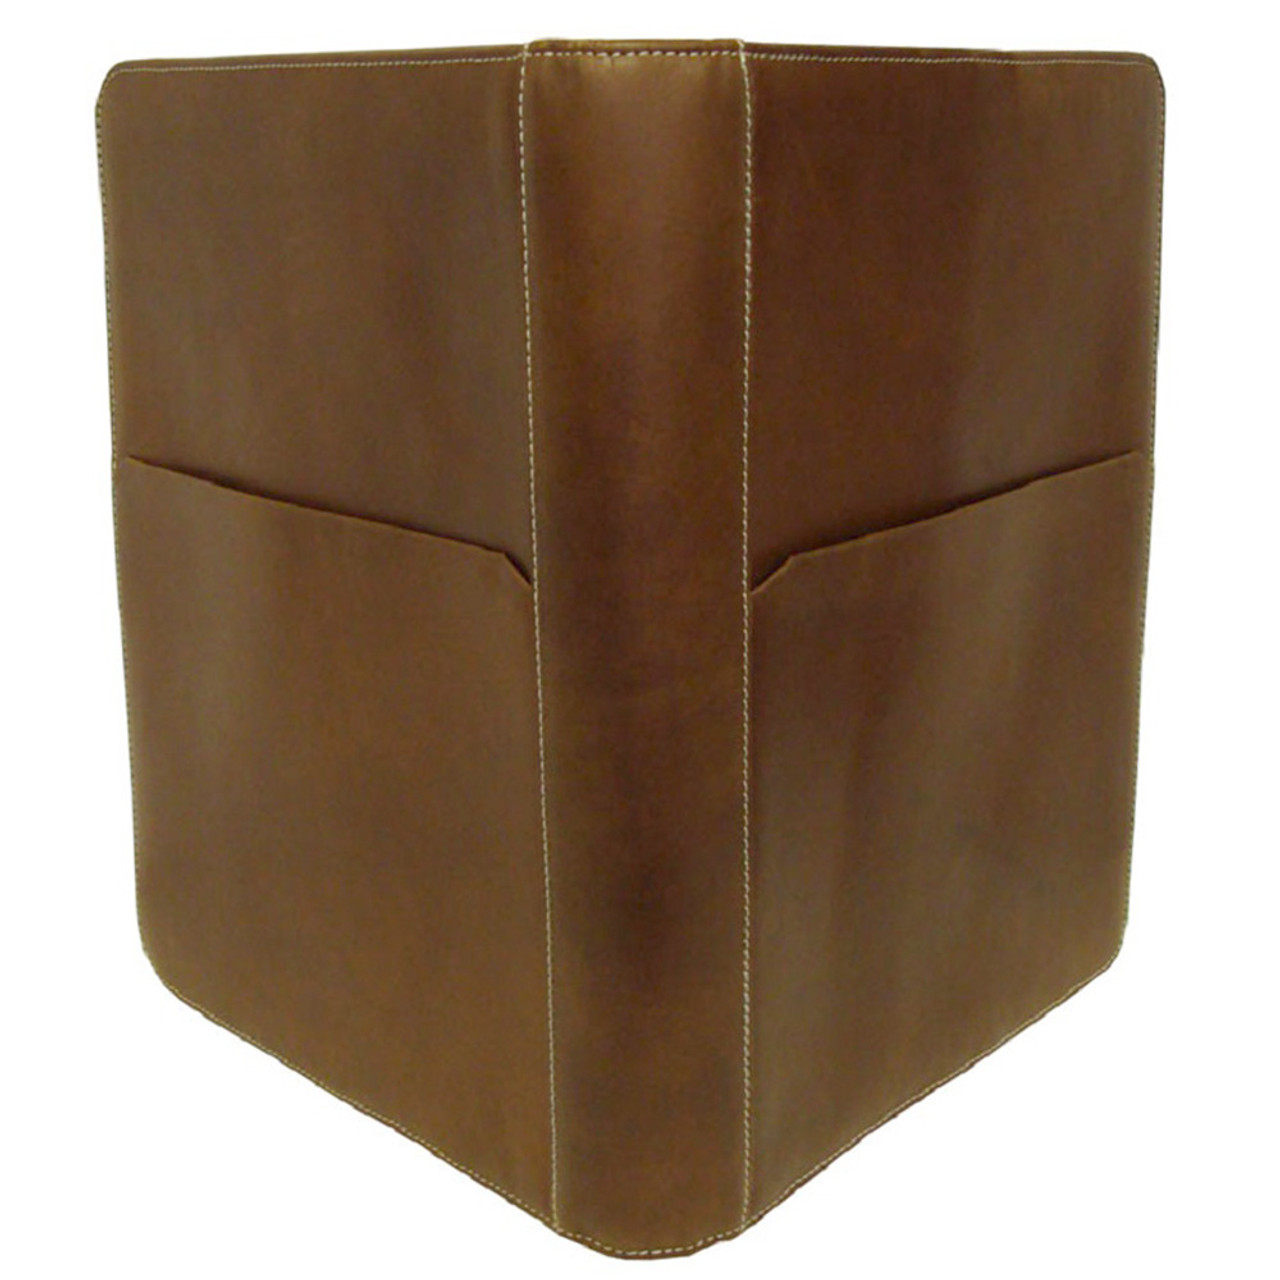 Leather Writing Portfolio Cover product image